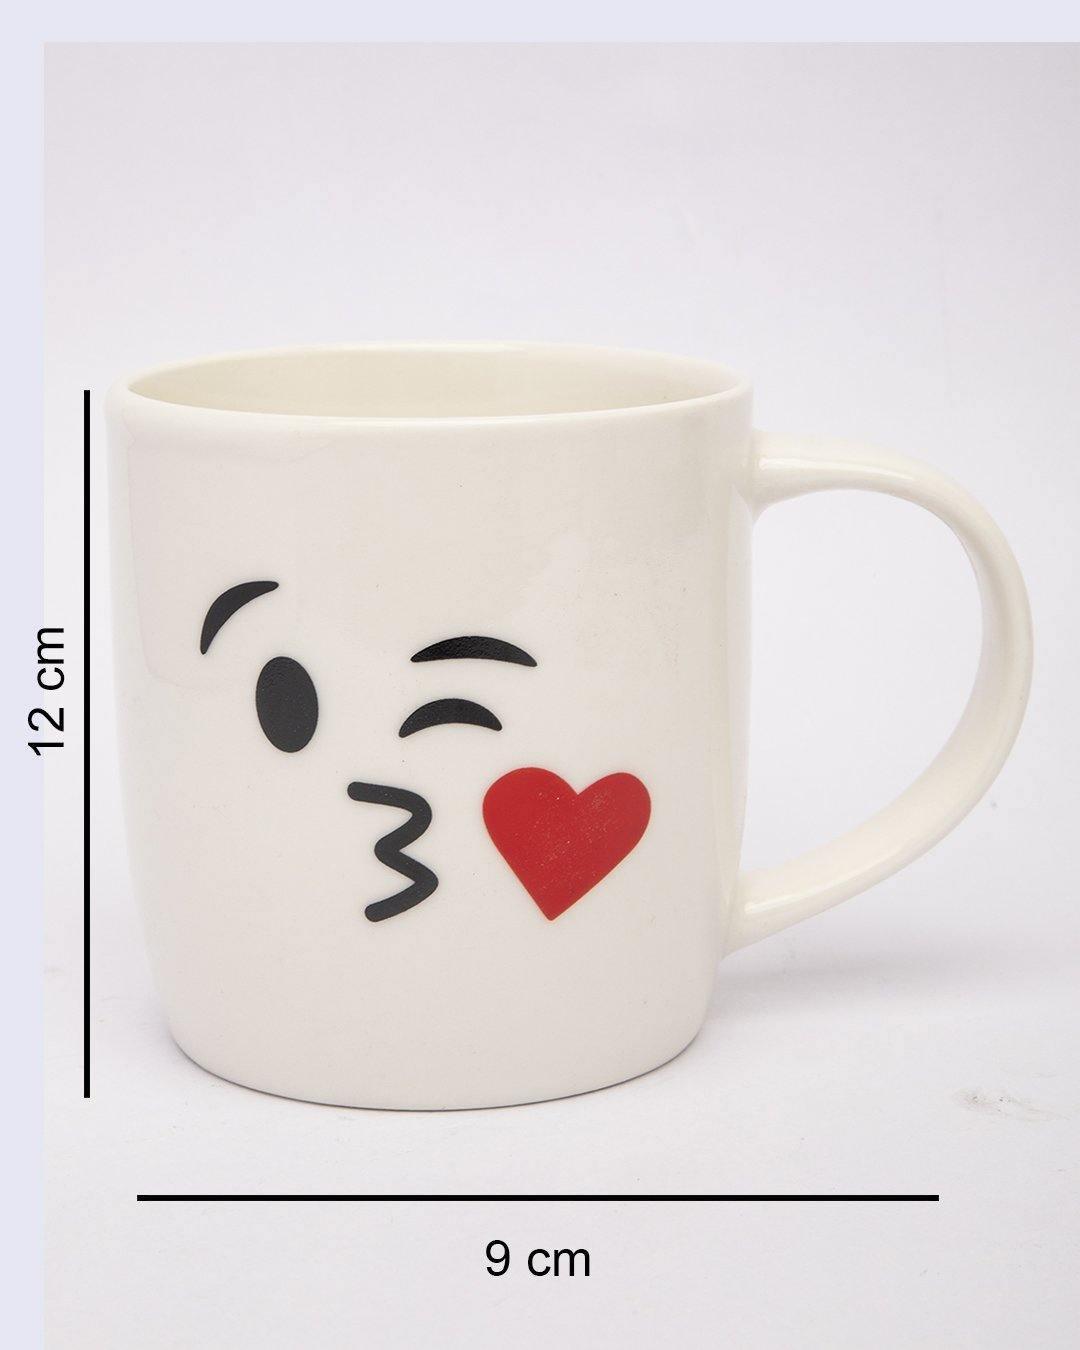 Mug, Emoji Print, for Tea & Coffee, White, Ceramic - MARKET 99